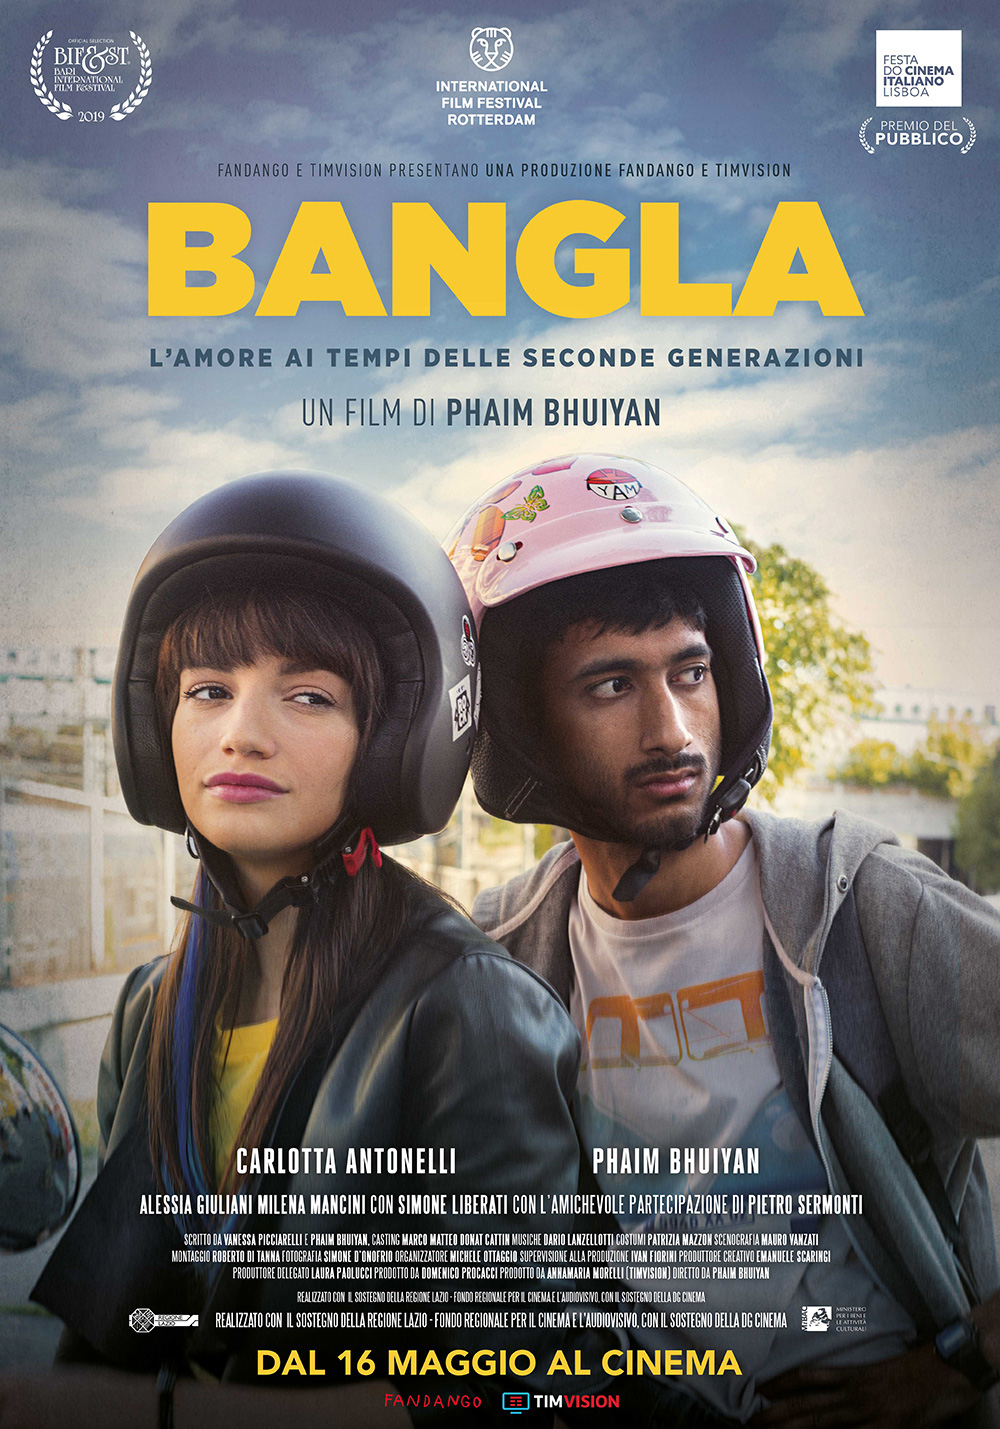 Bangla, dvd cover